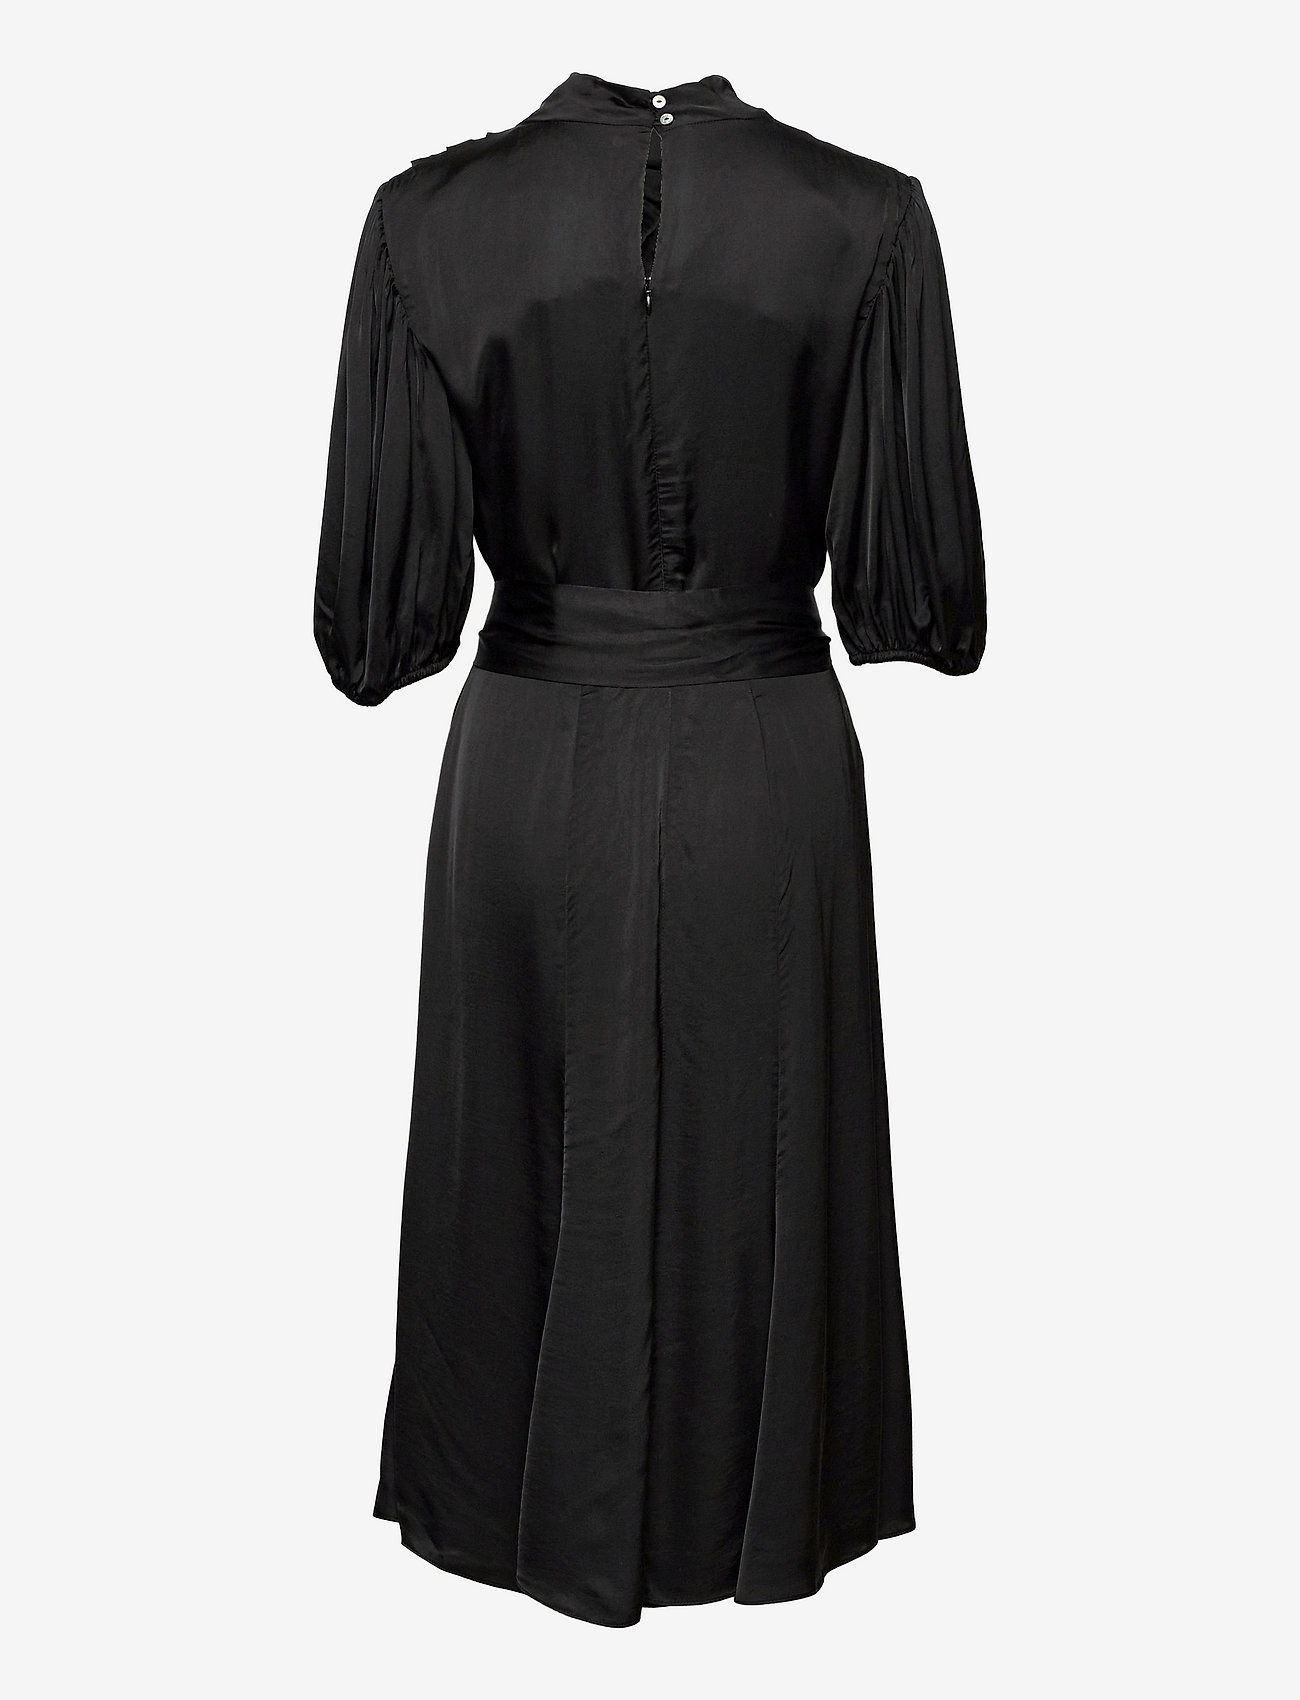 Ravn - VALENTINA DRESS - midi dresses - 001 black - 1